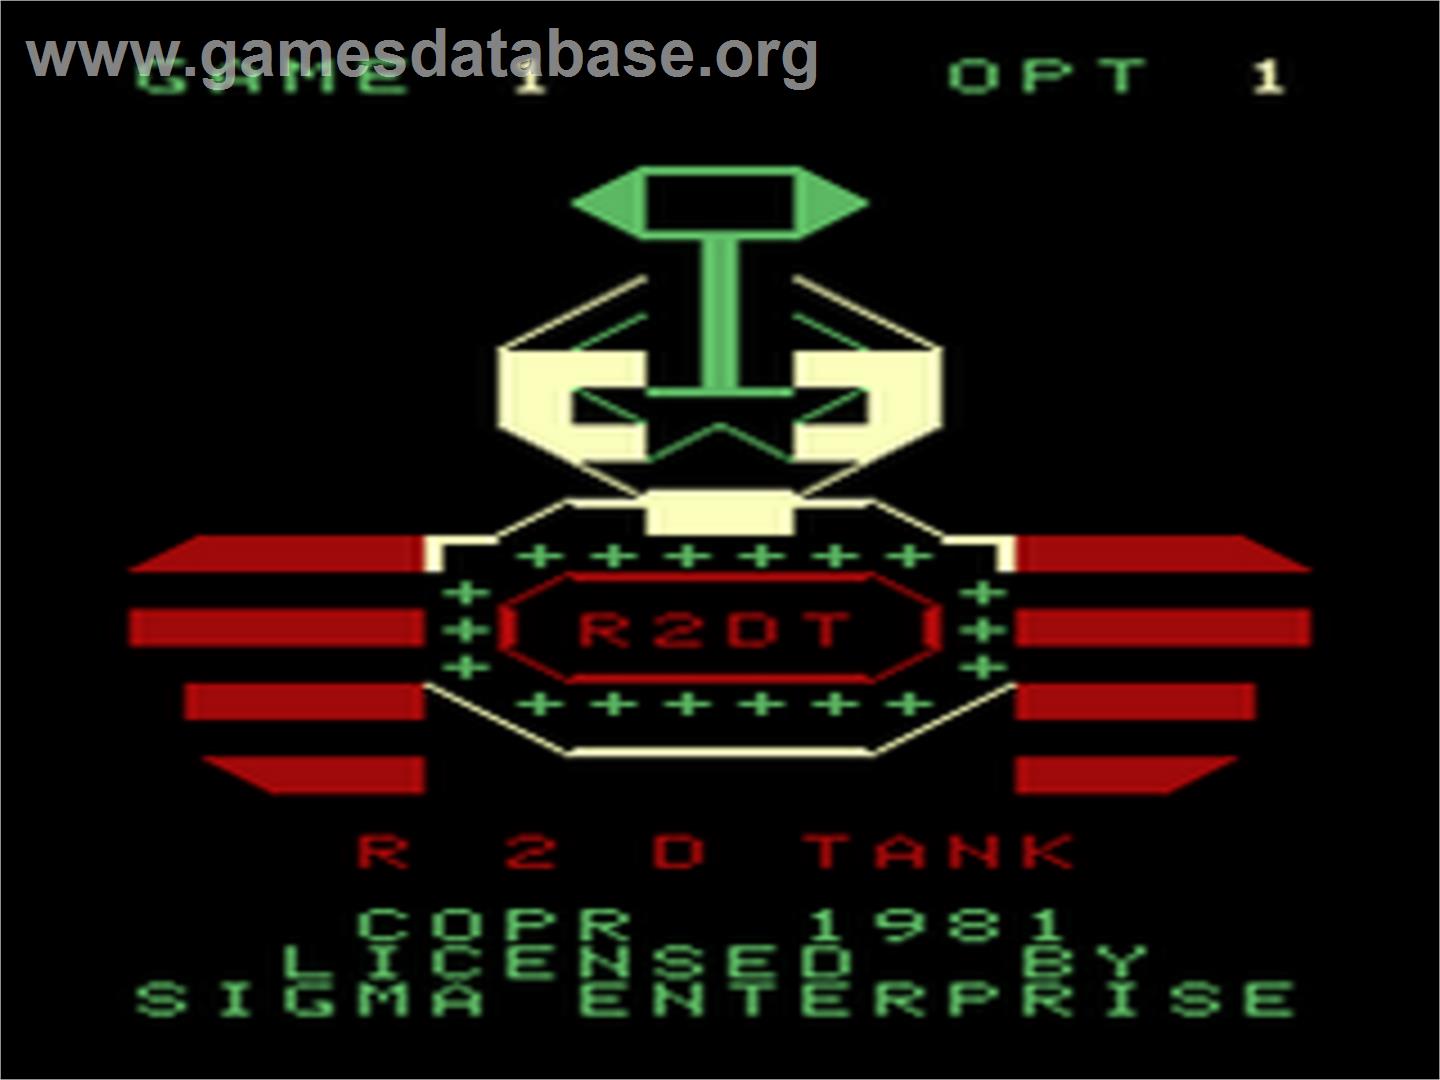 R2D Tank - Emerson Arcadia 2001 - Artwork - Title Screen